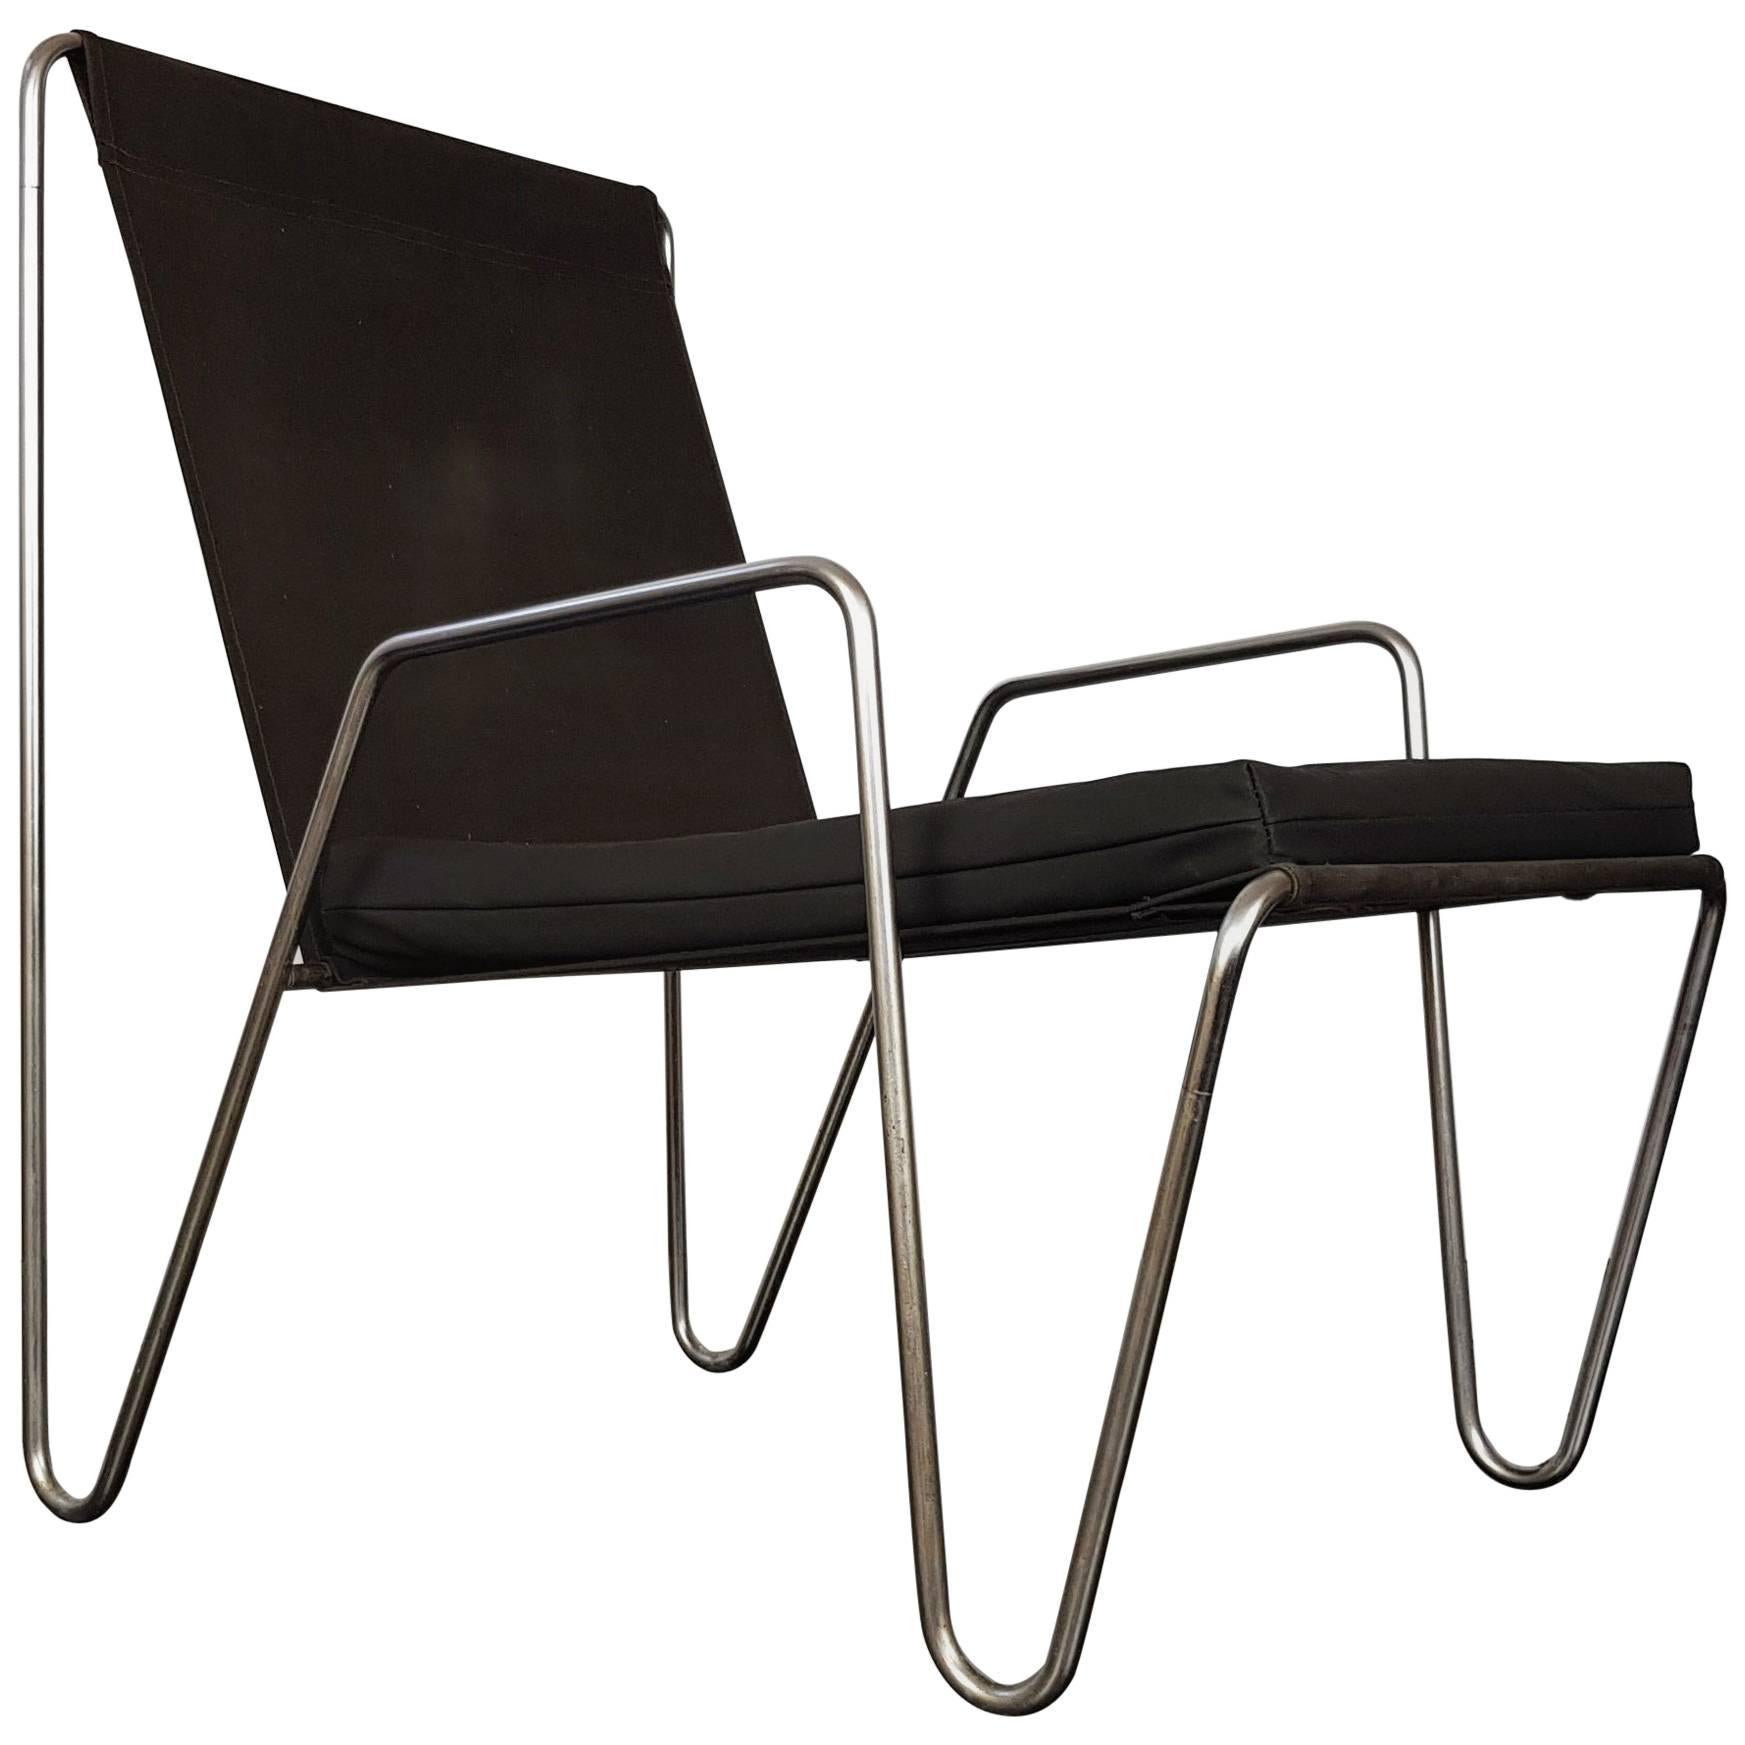 Verner Panton 'Bachelor' Easy Chair, Manufactured by Fritz Hansen, Denmark, 1955